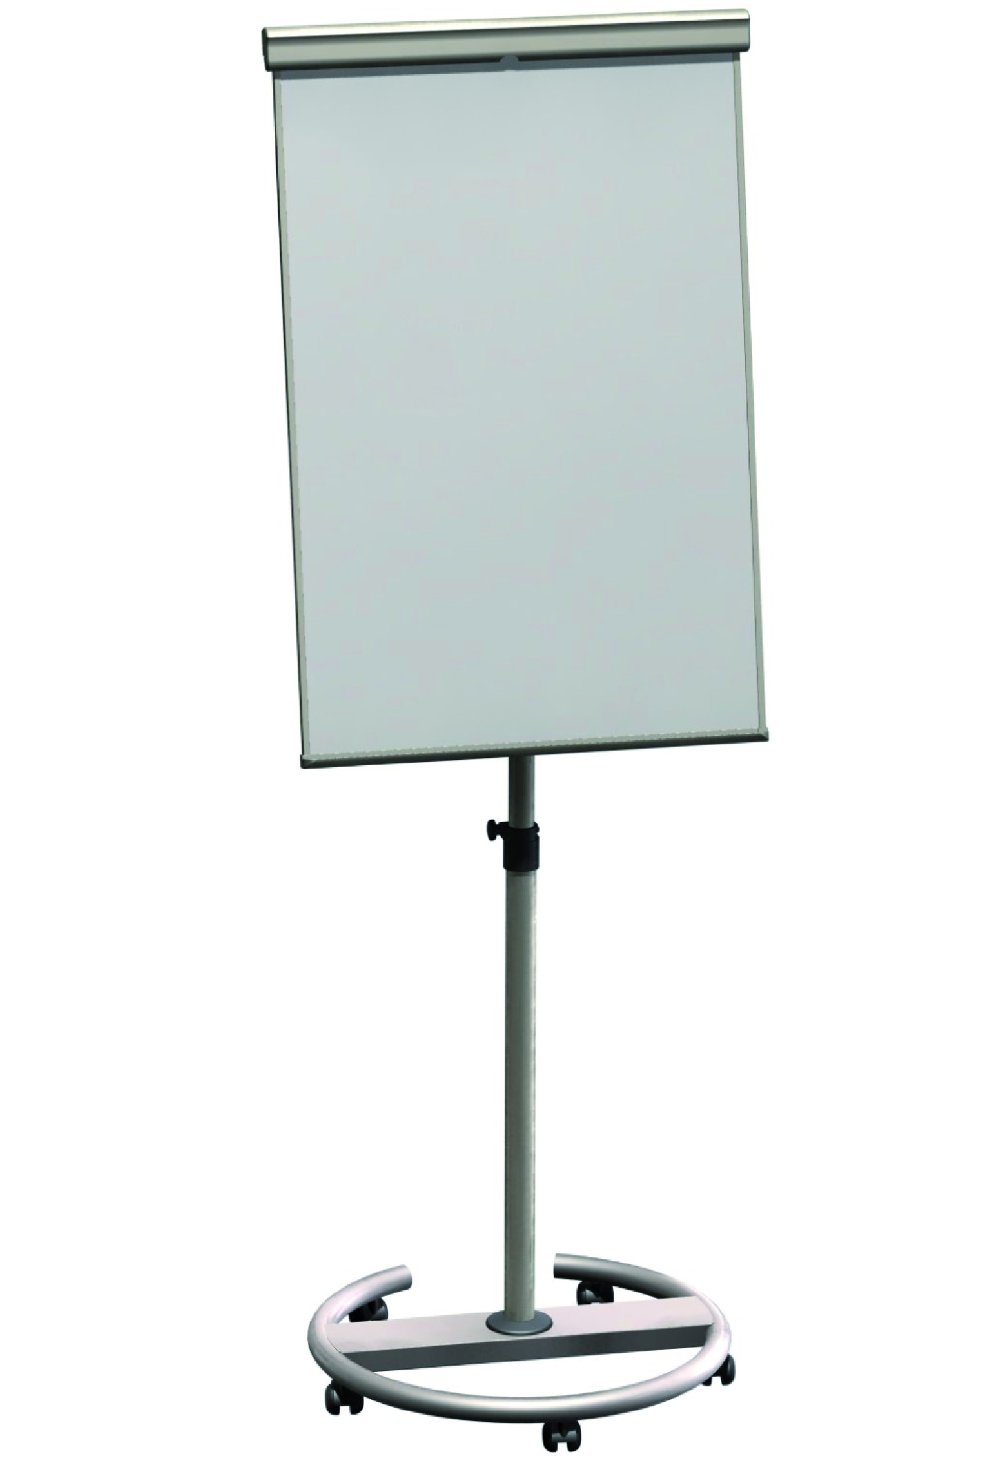 Spoko S0717 flipchart mobilní, výsuvná ramena, 105 x 68 cm, výška až 190 cm, bílý